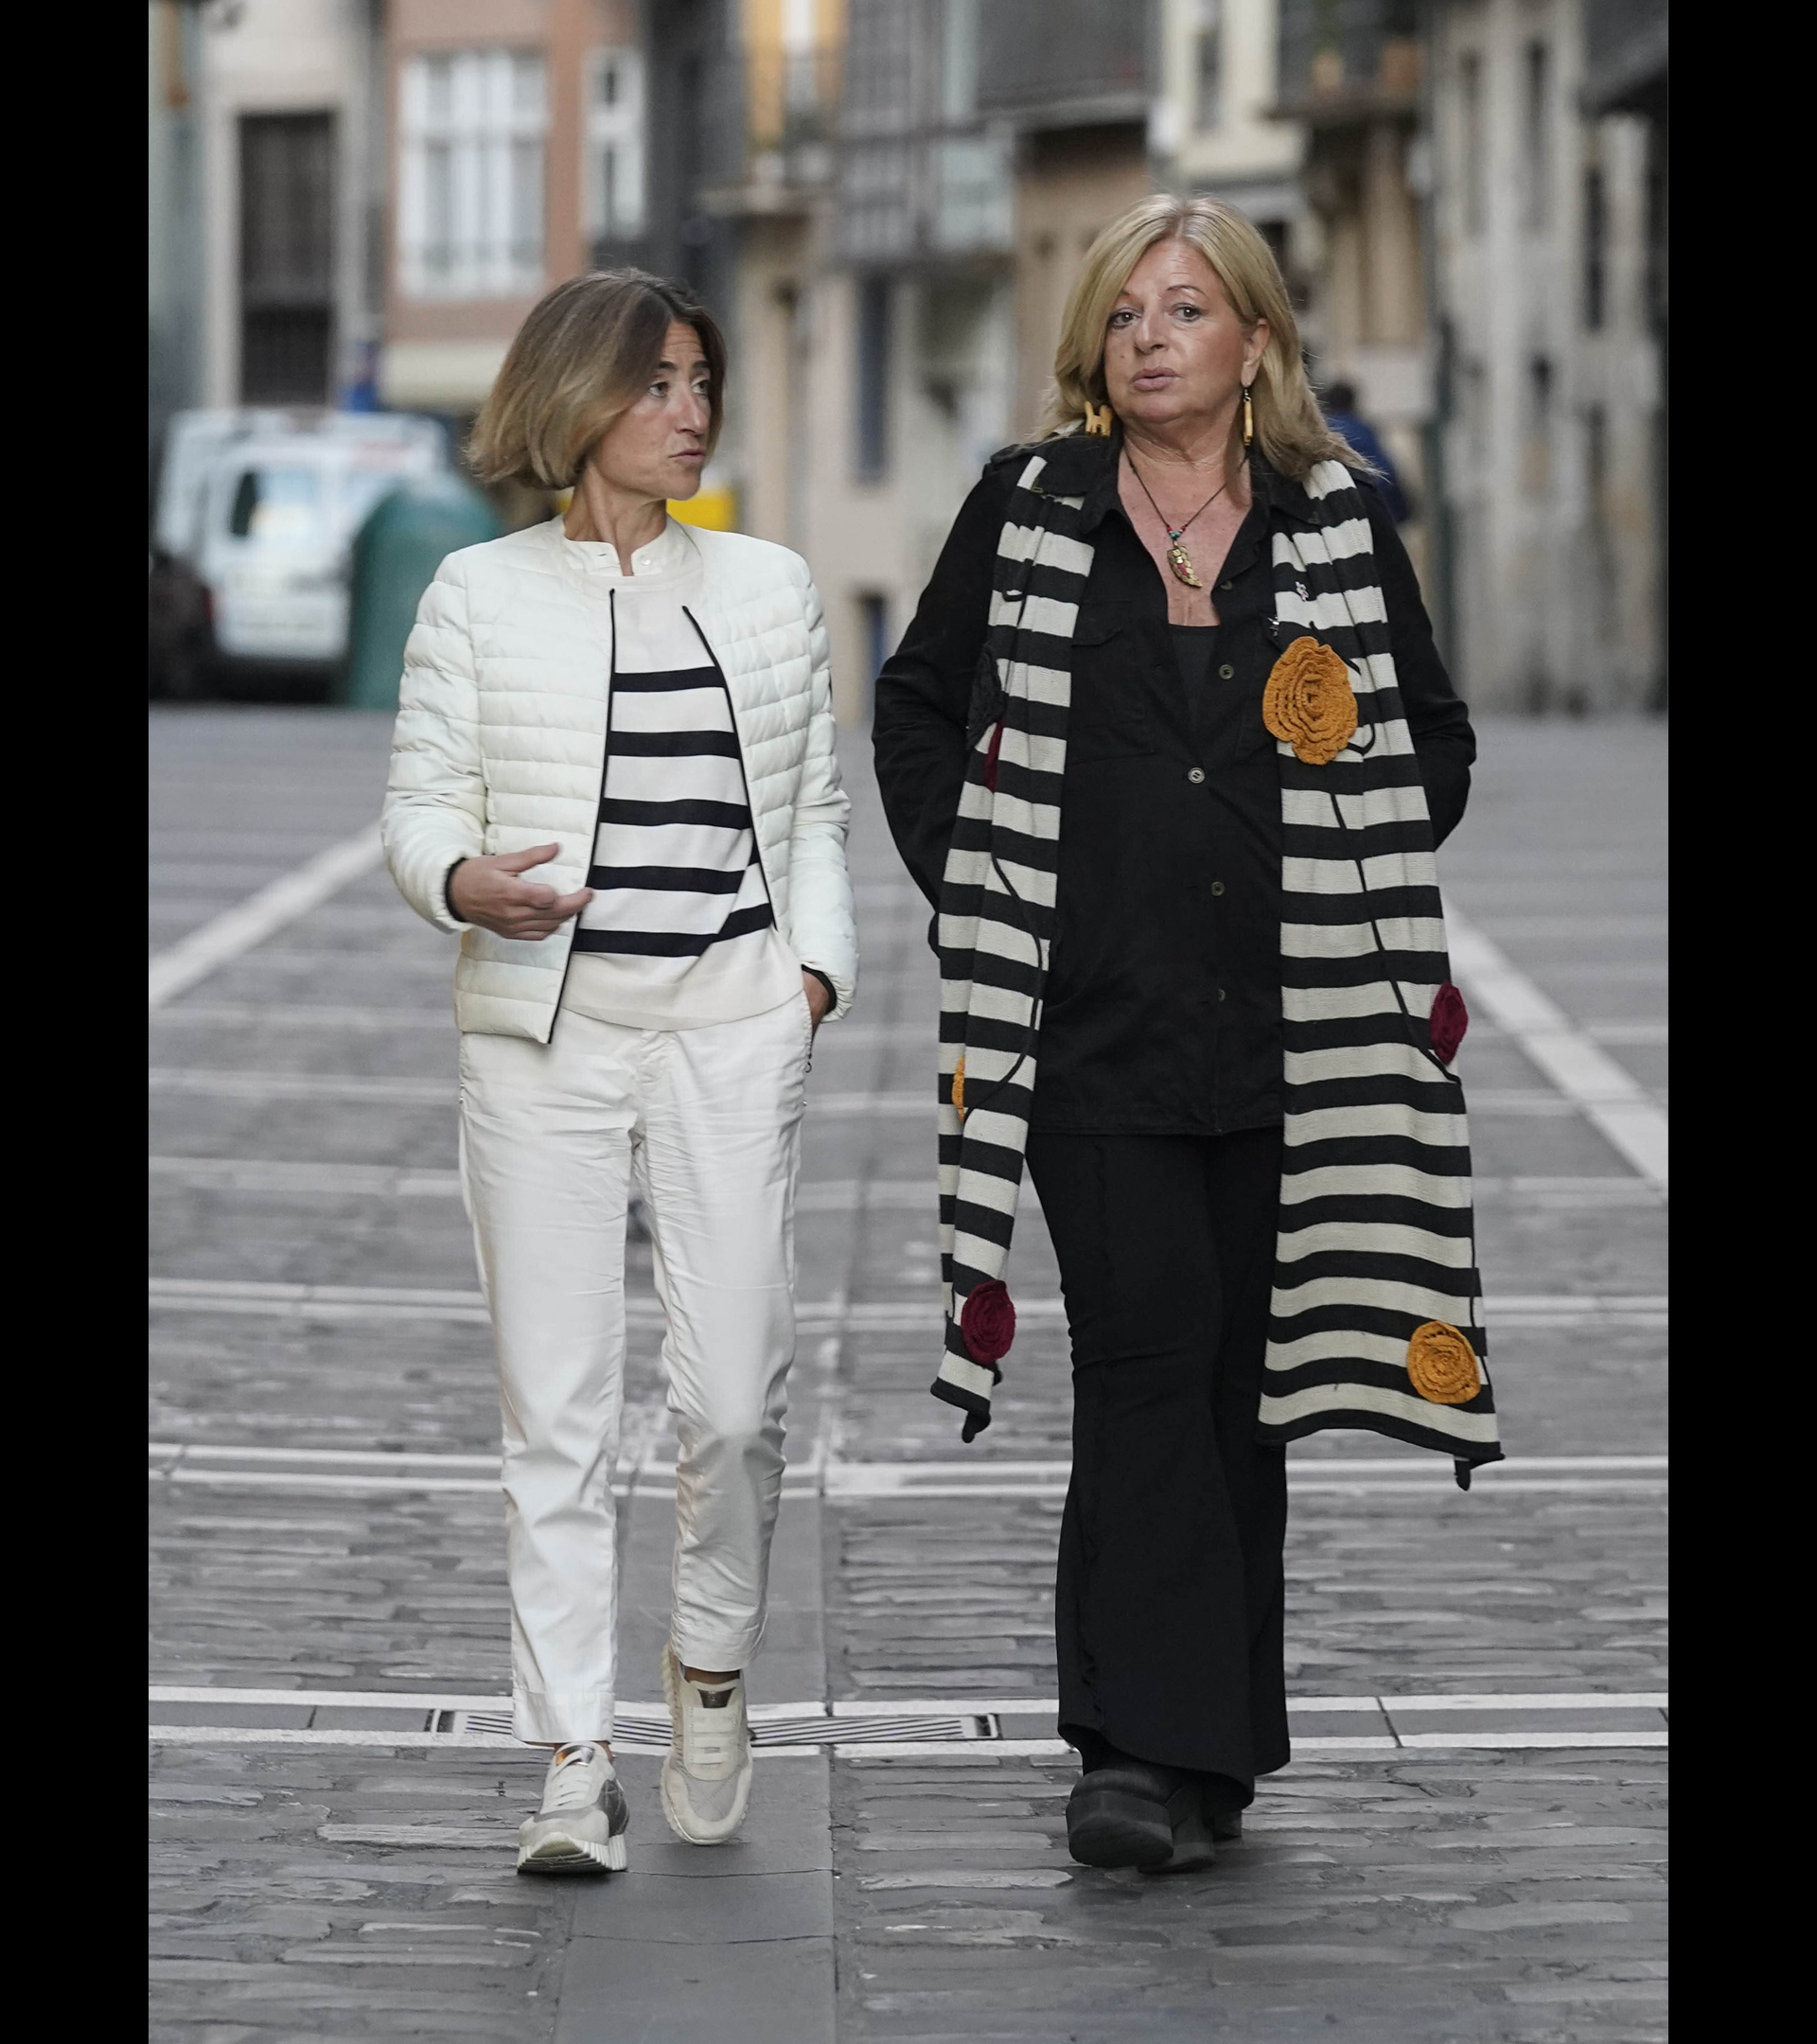 Pilar Zabala y Consuelo Ordóñez, paseando por el casco viejo de Pamplona.